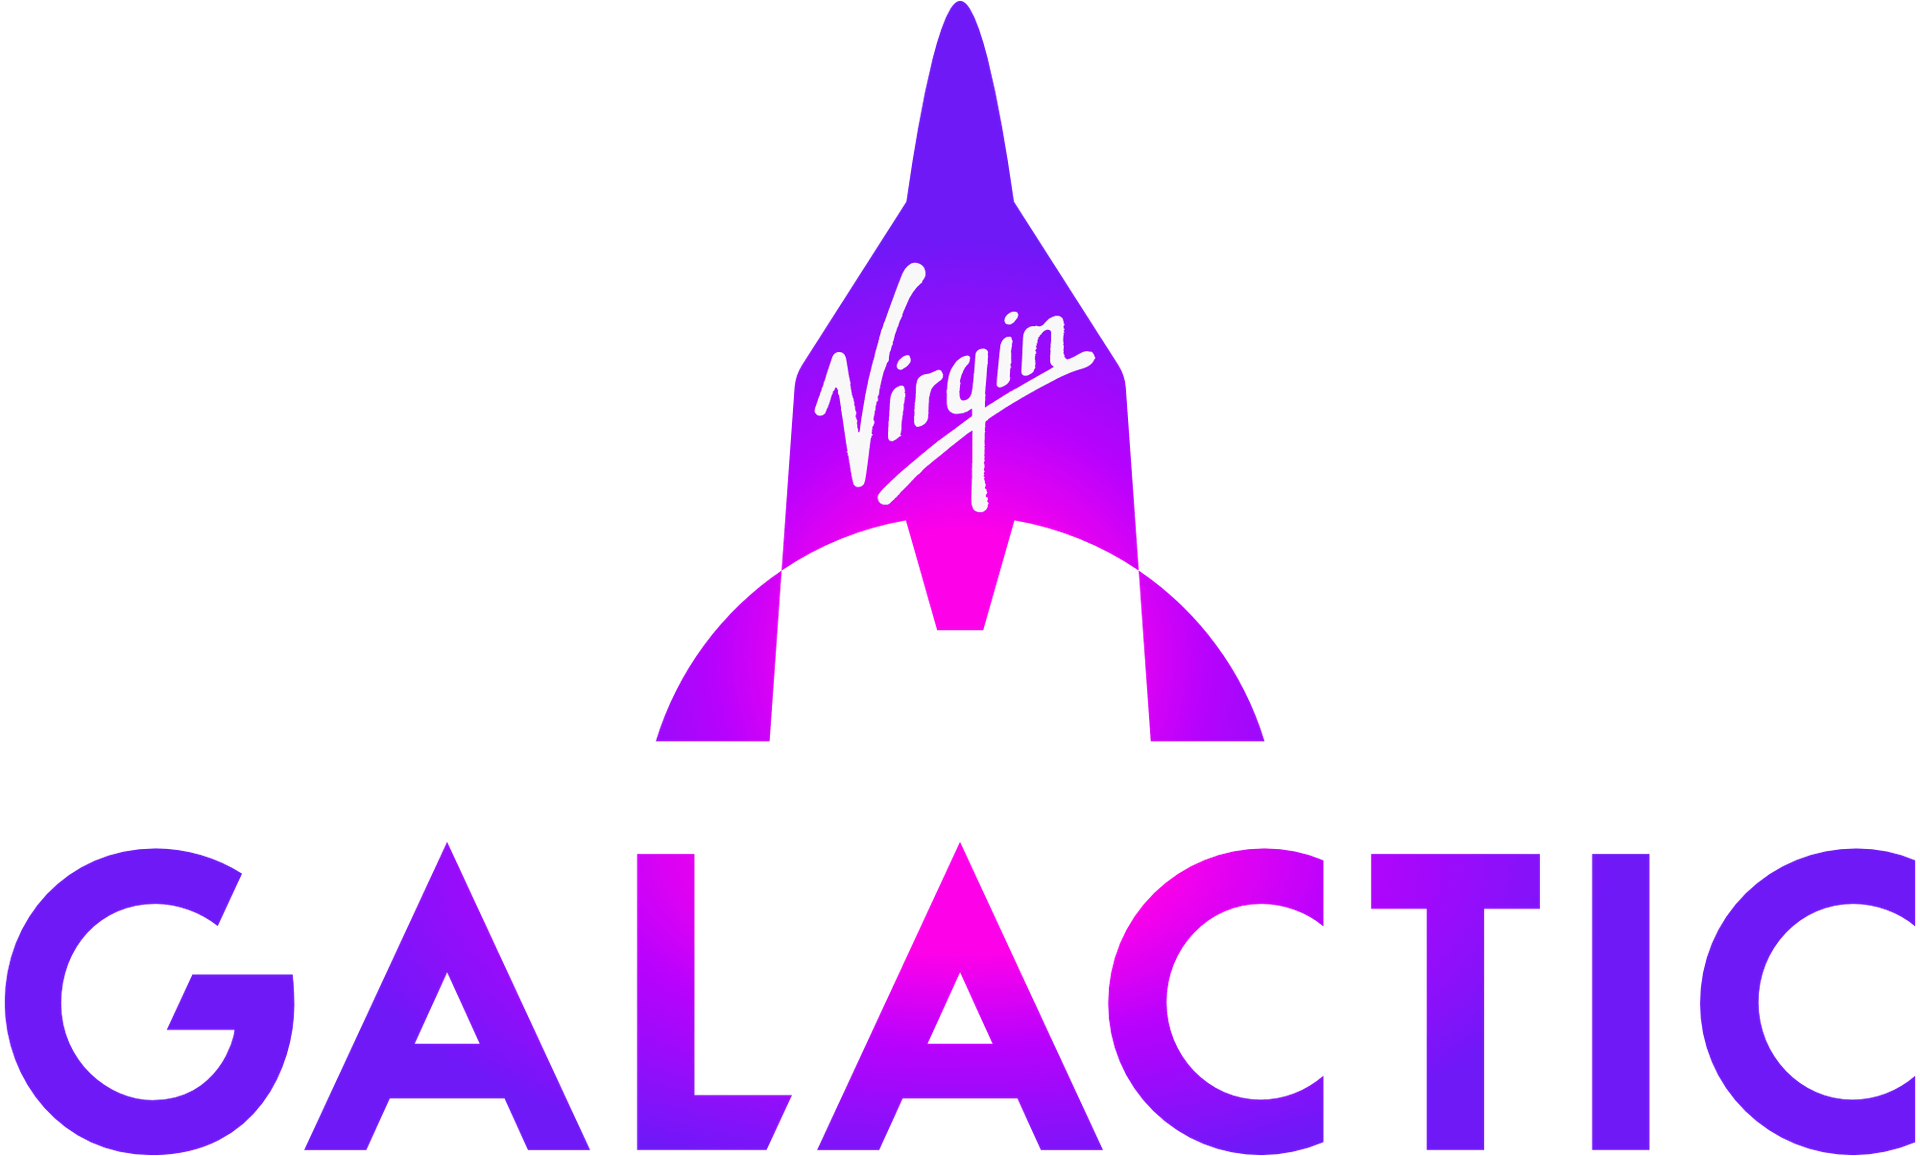 Virgin Galactic's logo